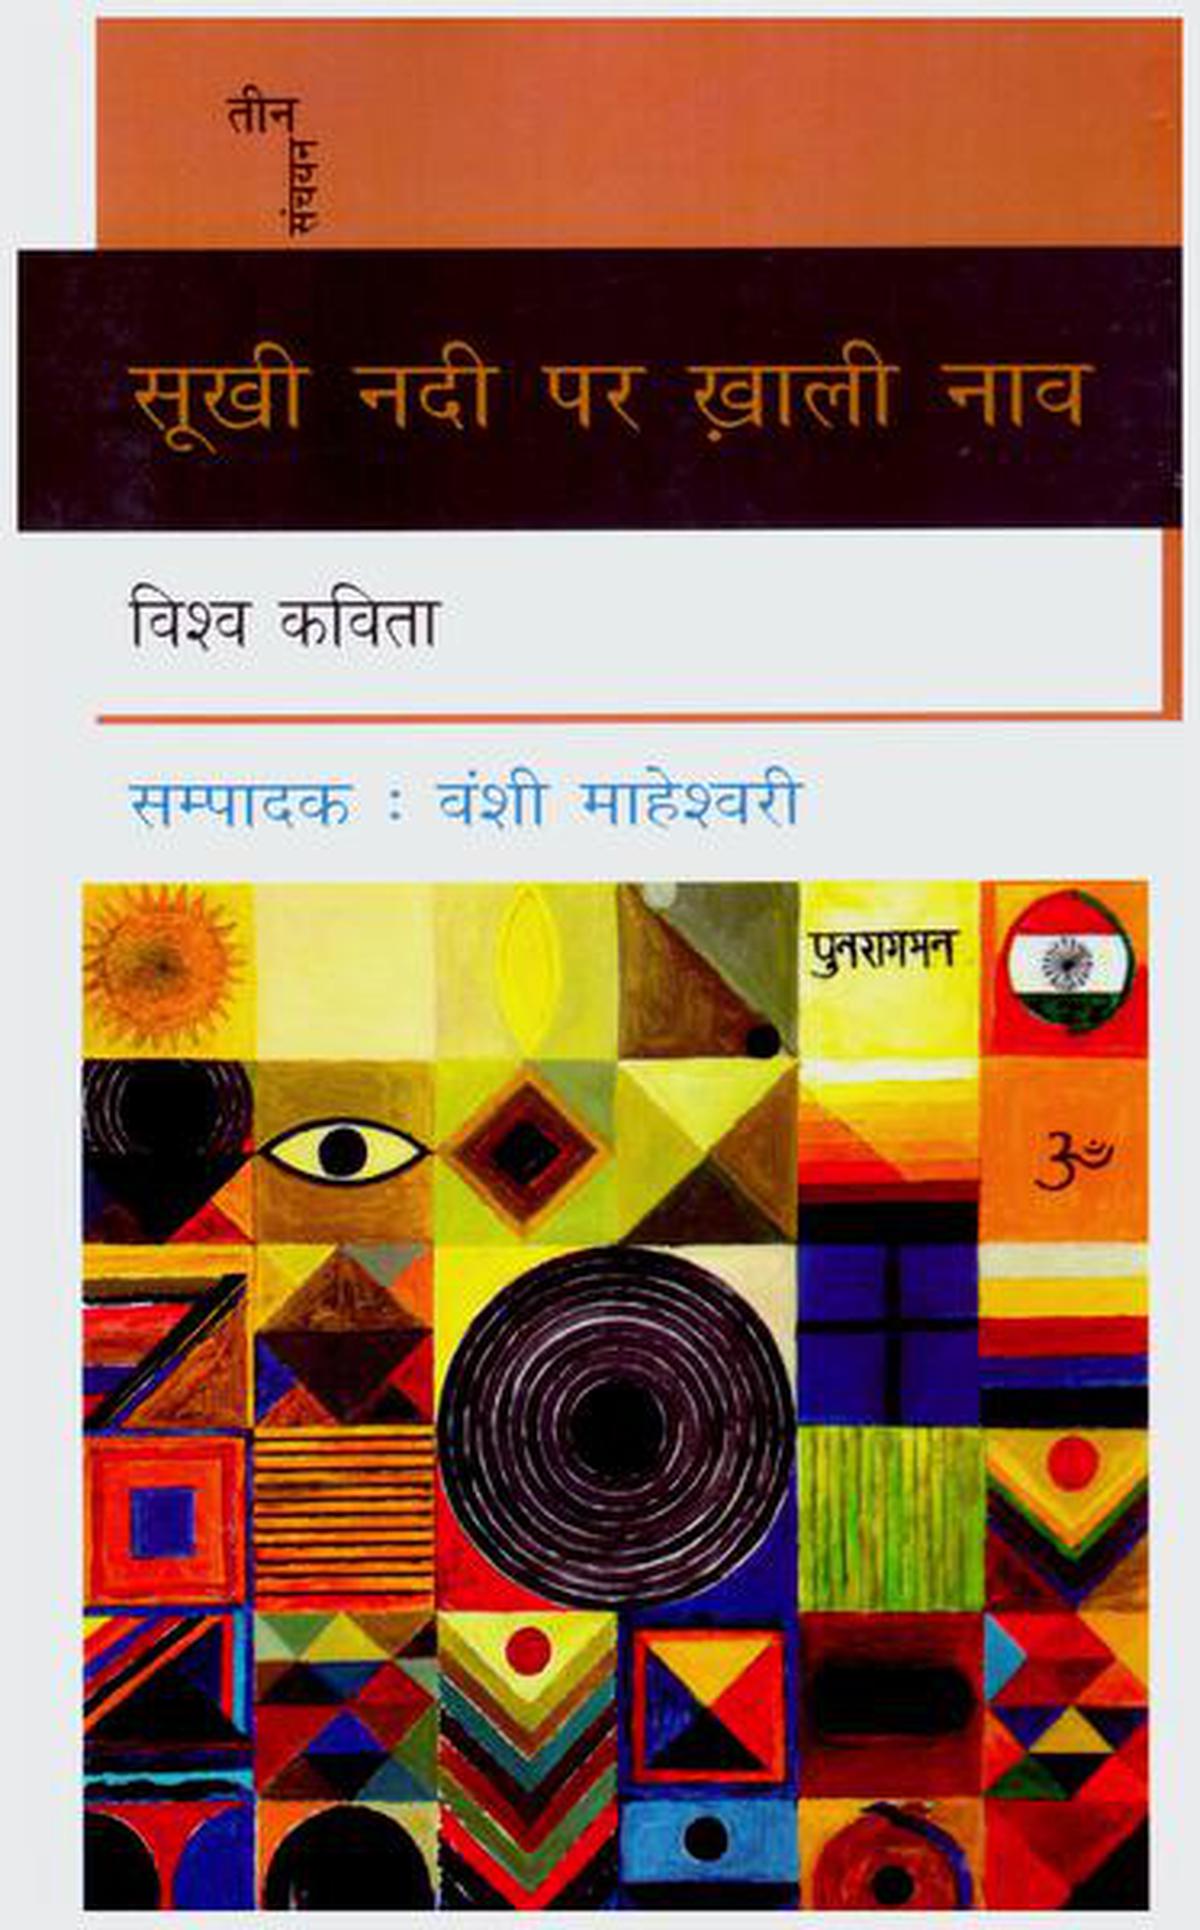 ‘Sookhi Nadi Par Khaali Naav’, a Vishwa Kavita (world poetry) volume edited by Vanshi Maheswari.